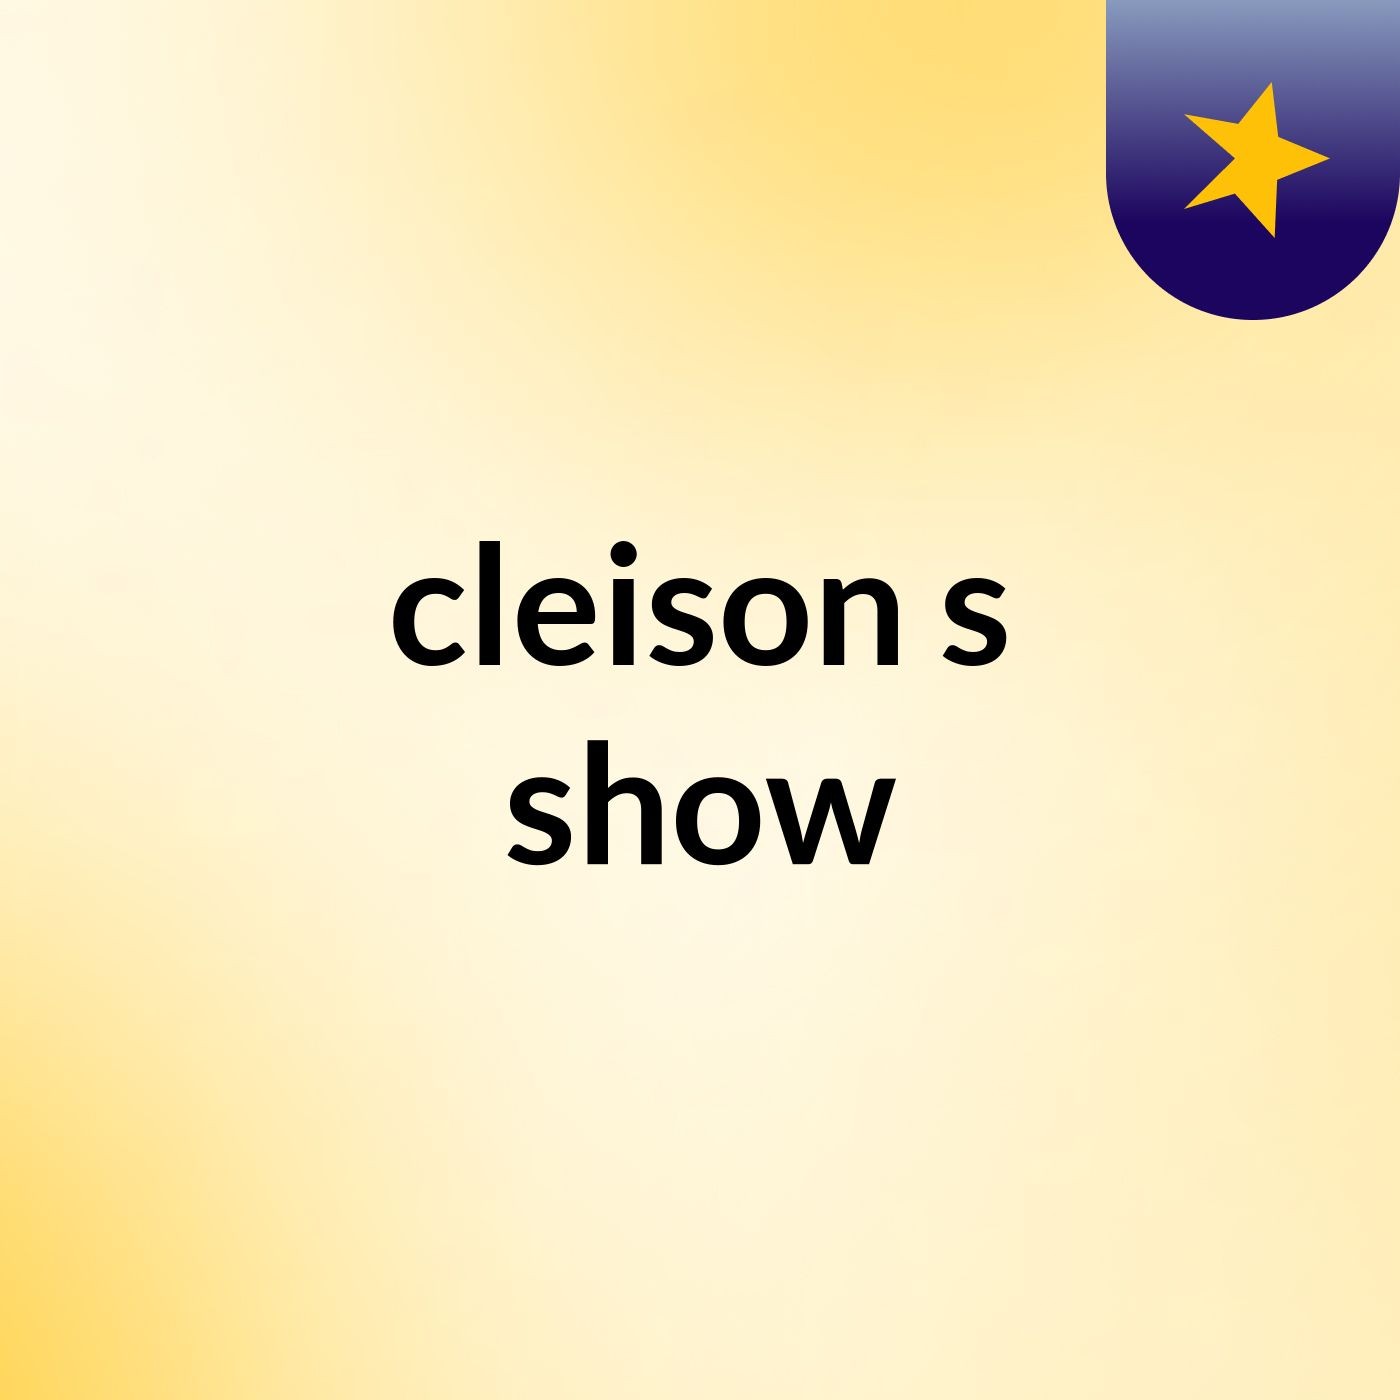 cleison's show